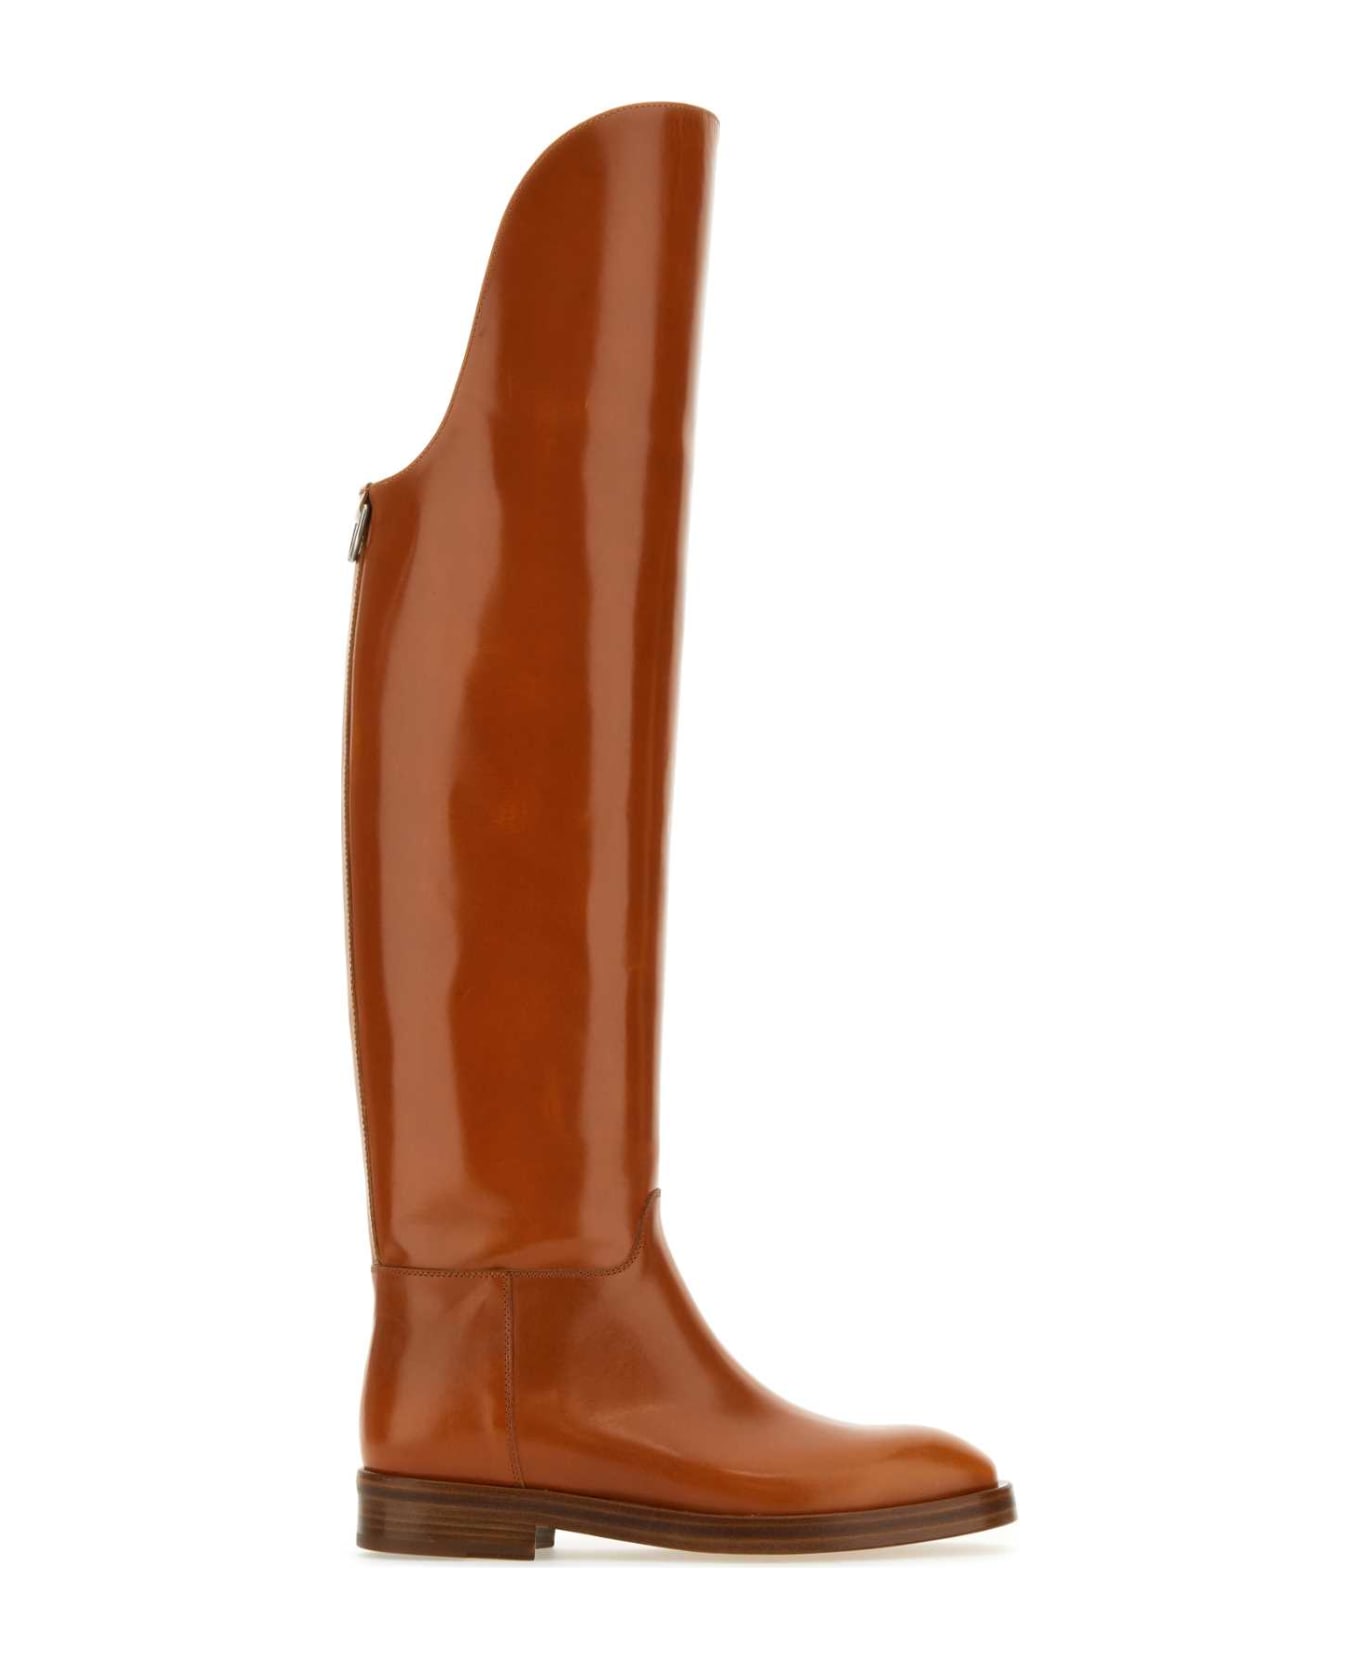 Durazzi Milano Caramel Leather Equestran Boots - Brown ブーツ